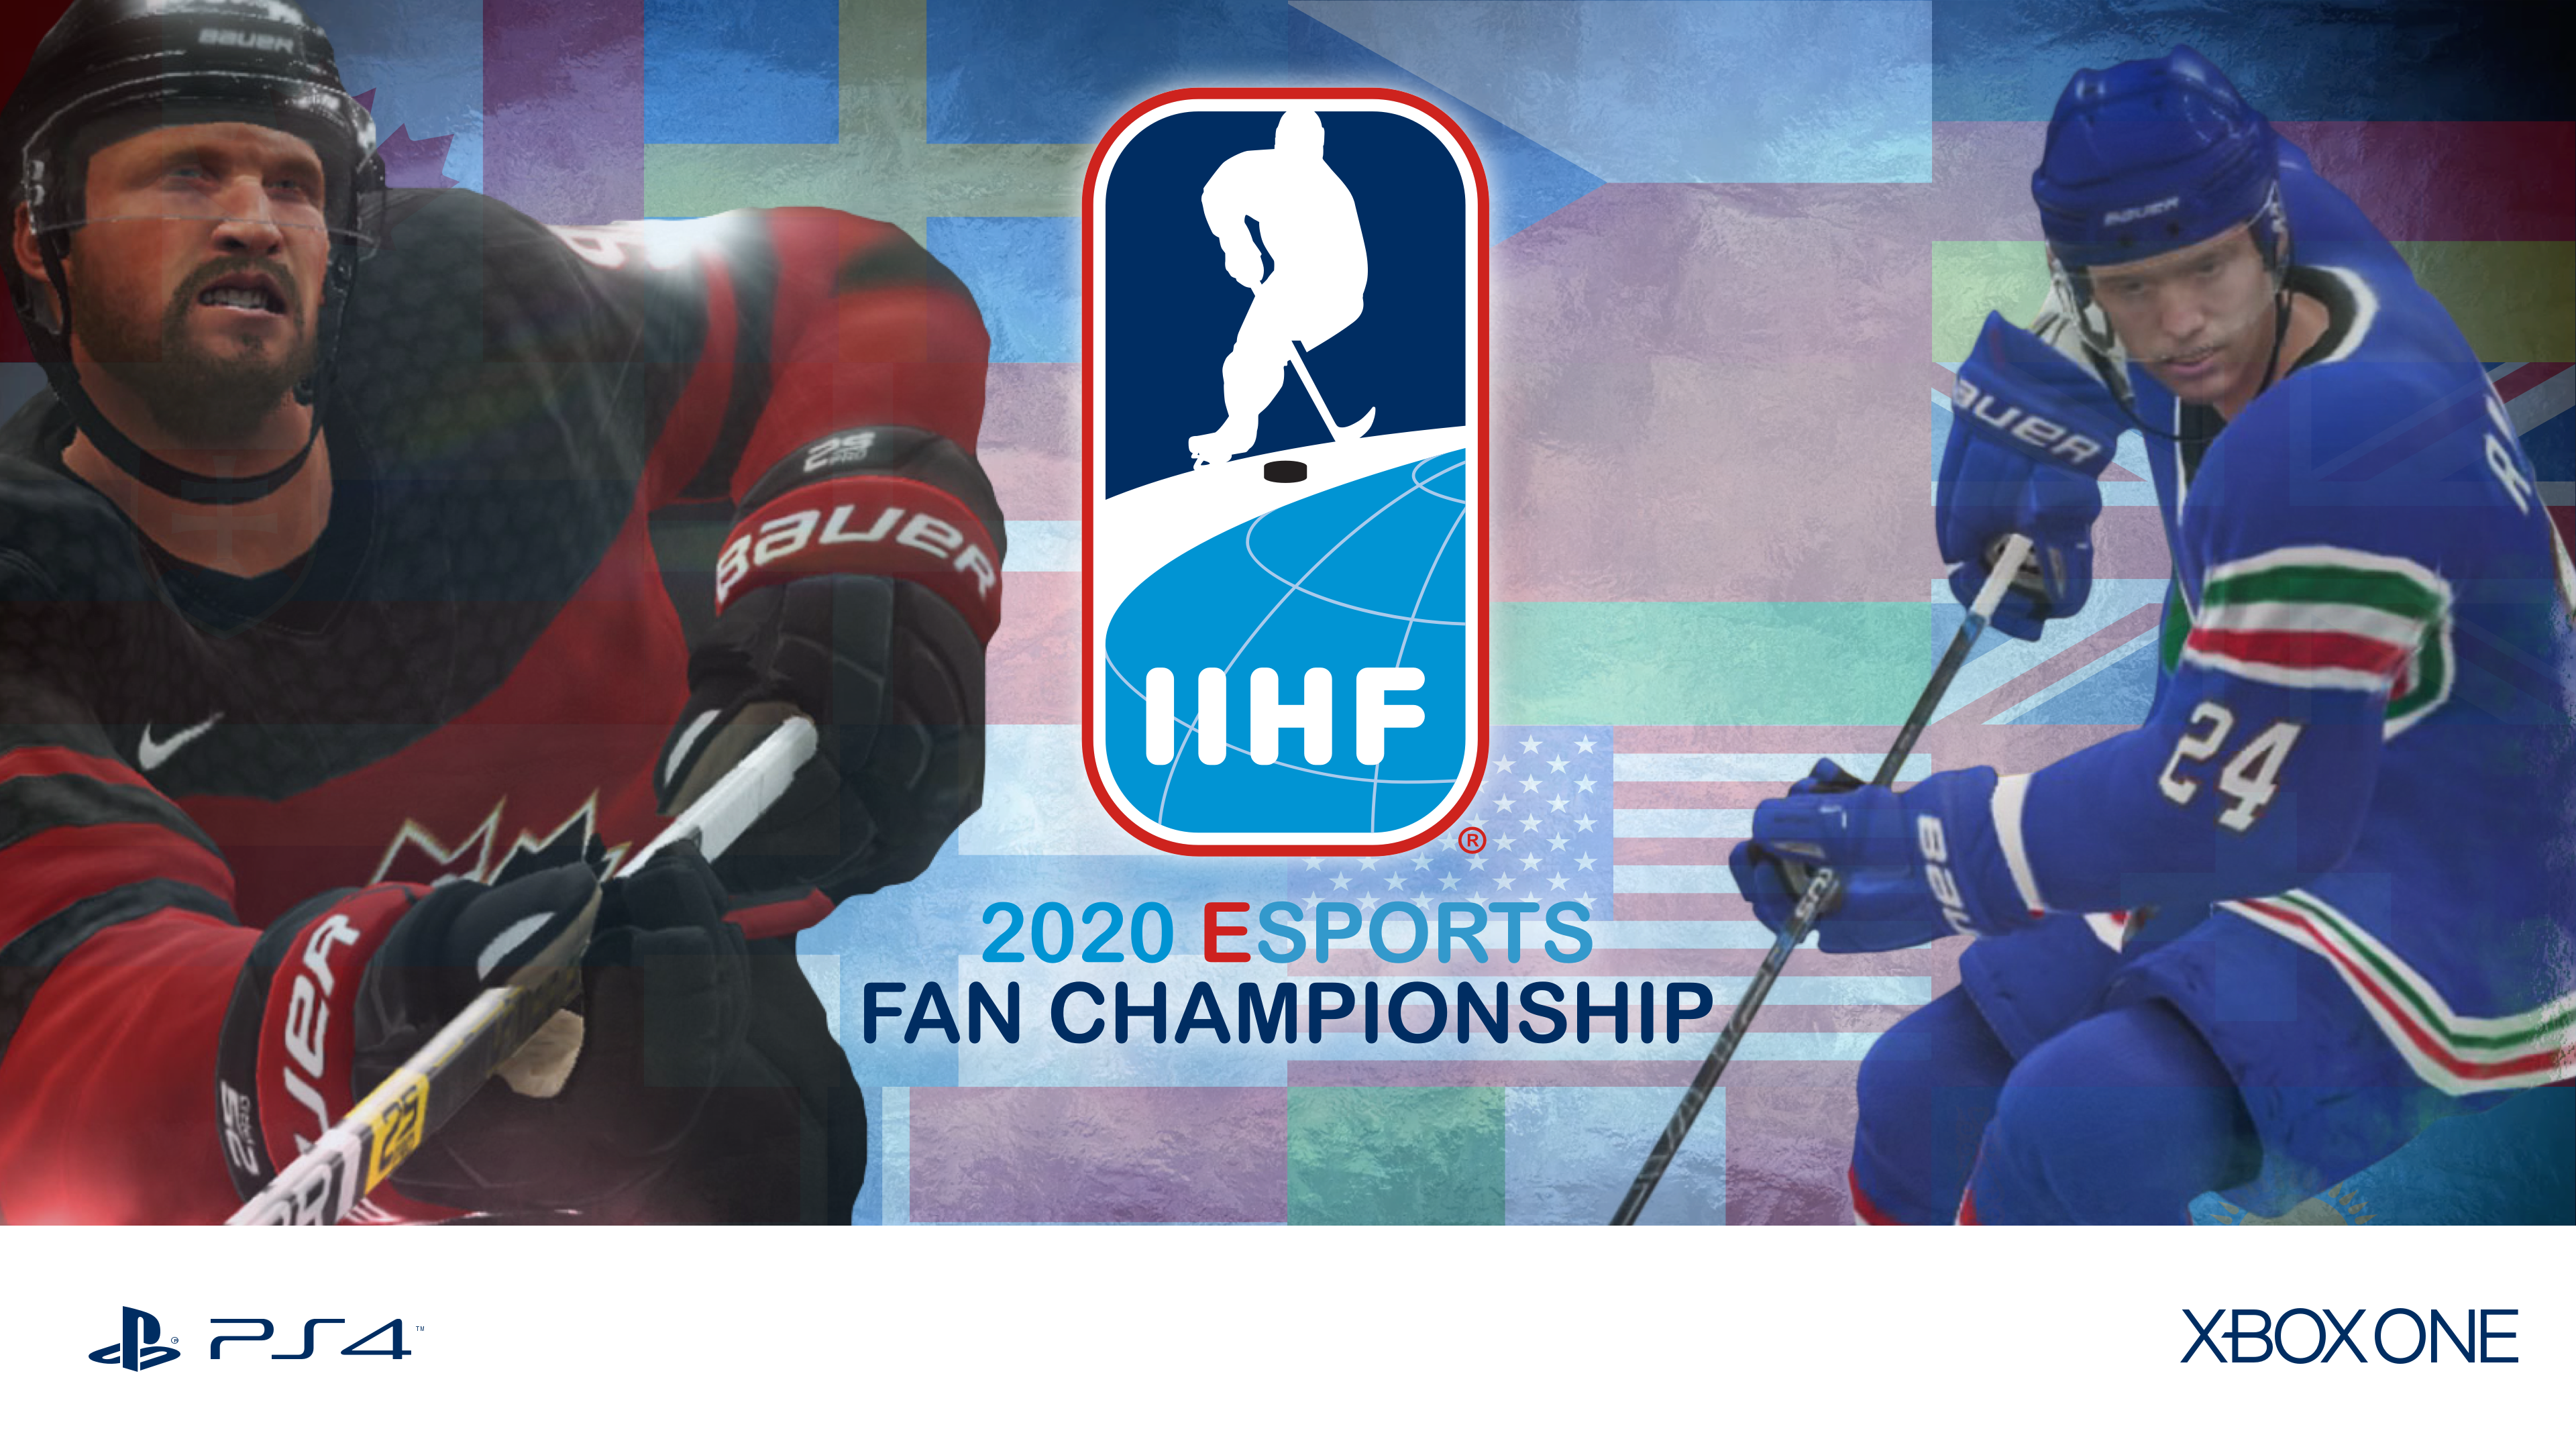 Germanys Esport Studio To Produce IIHF Esports Fan Championship Starting on May 15